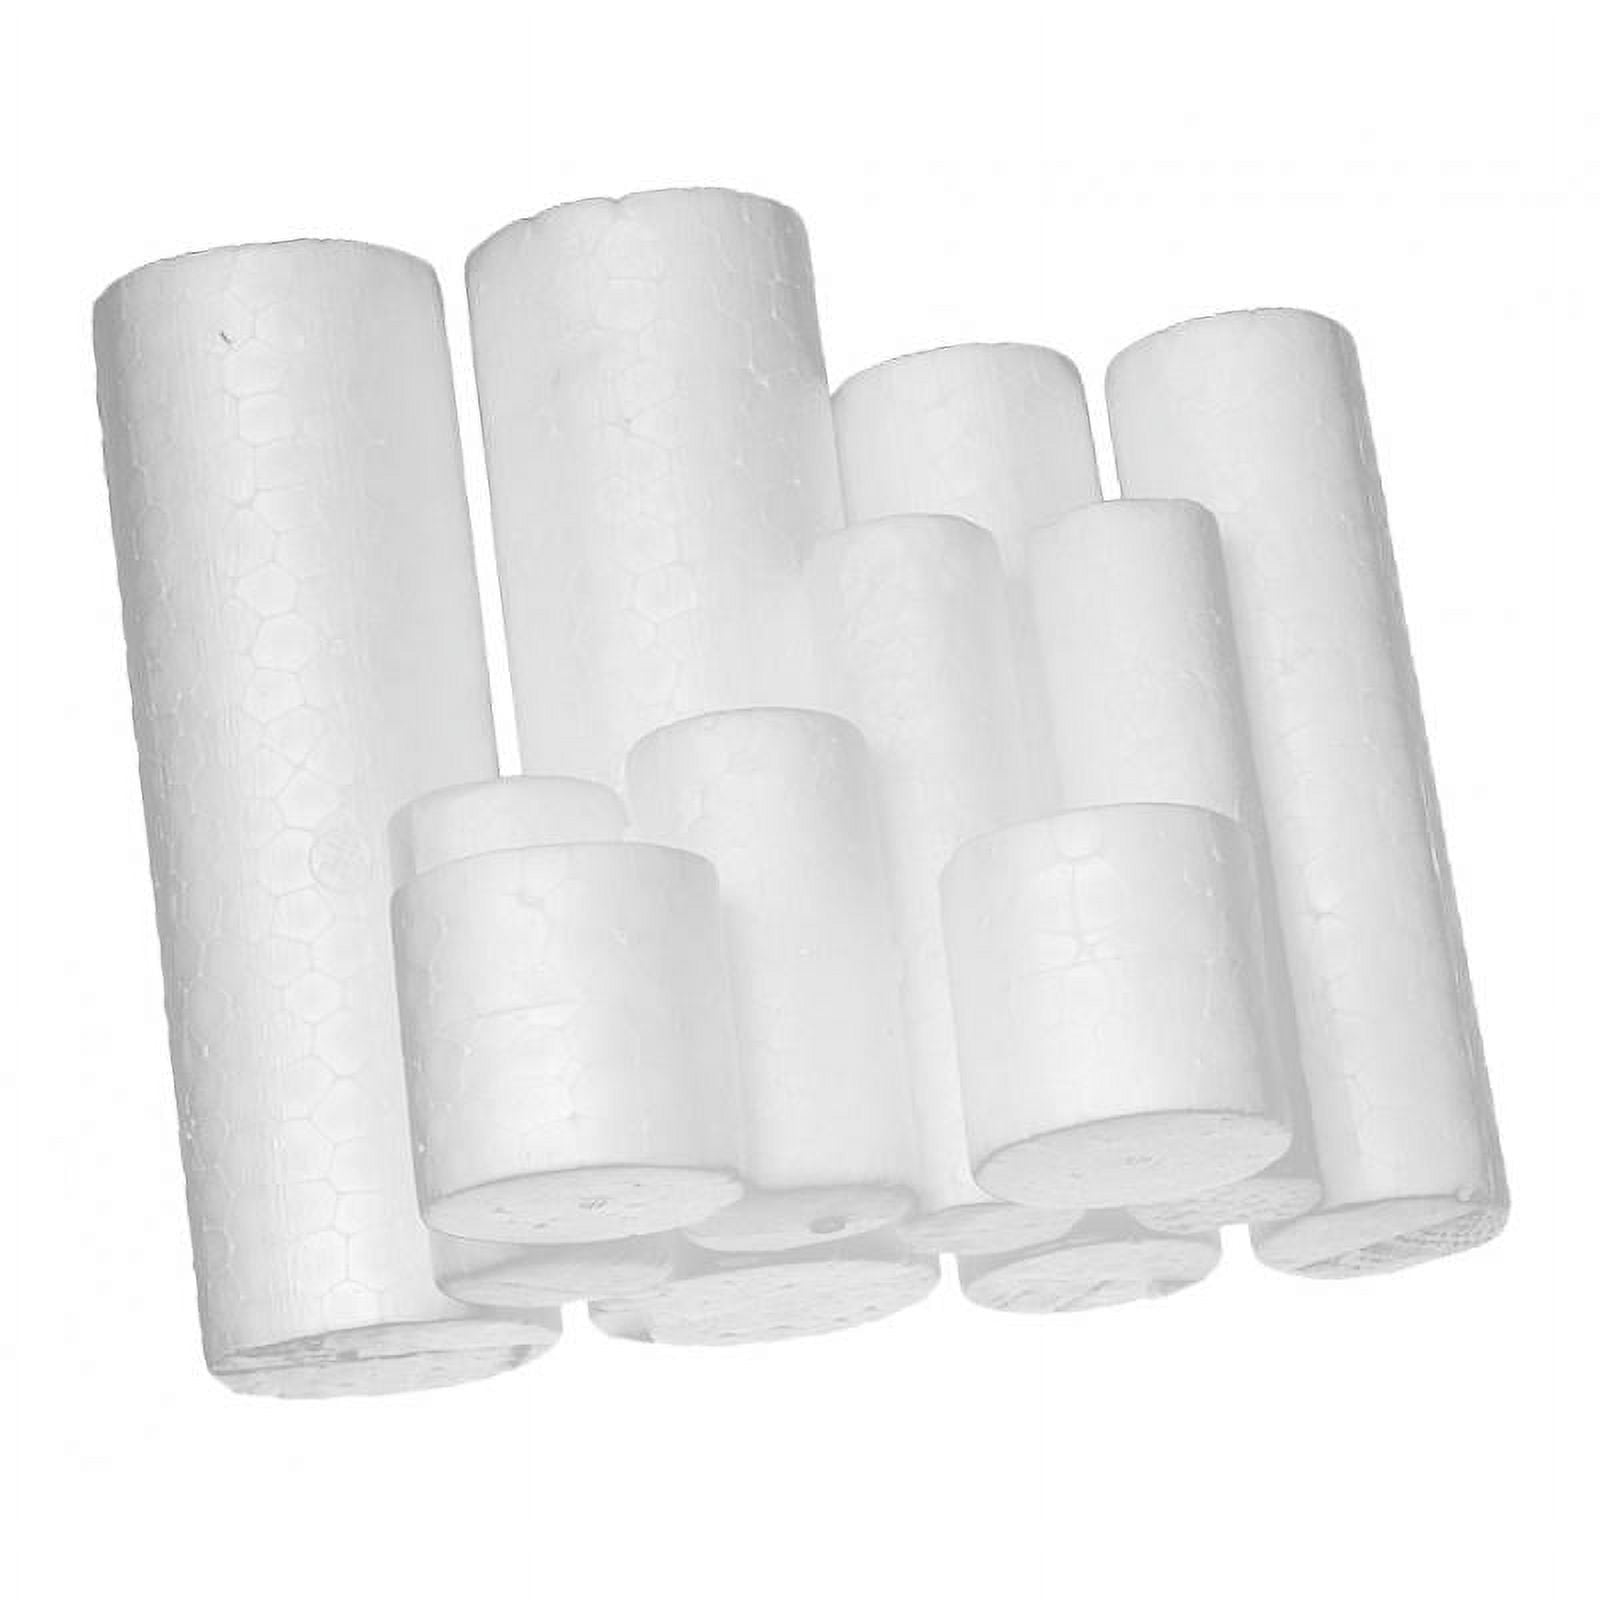 10x Cylinder Shape Styrofoam Foam Material for Kids Modeling Craft 14x4.5cm